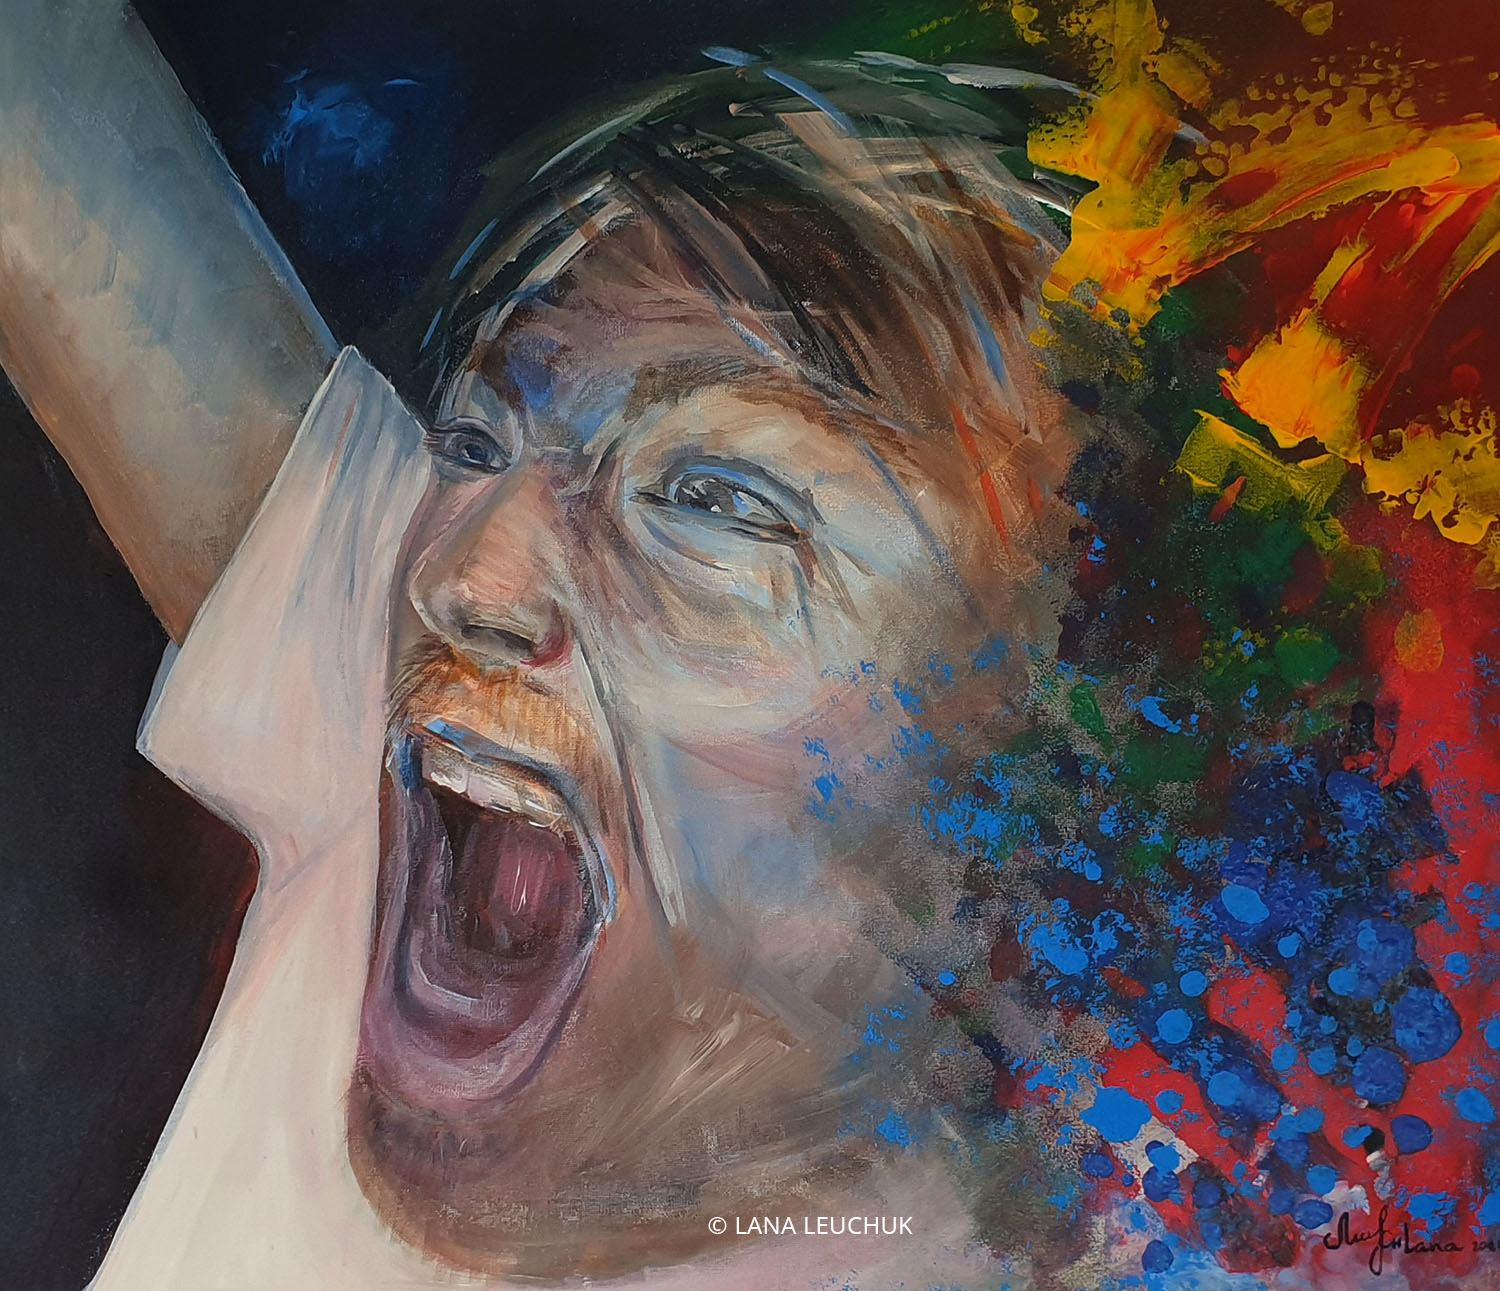 Lana-Leuchuk-Shouting out-acrylic painting-2021-w